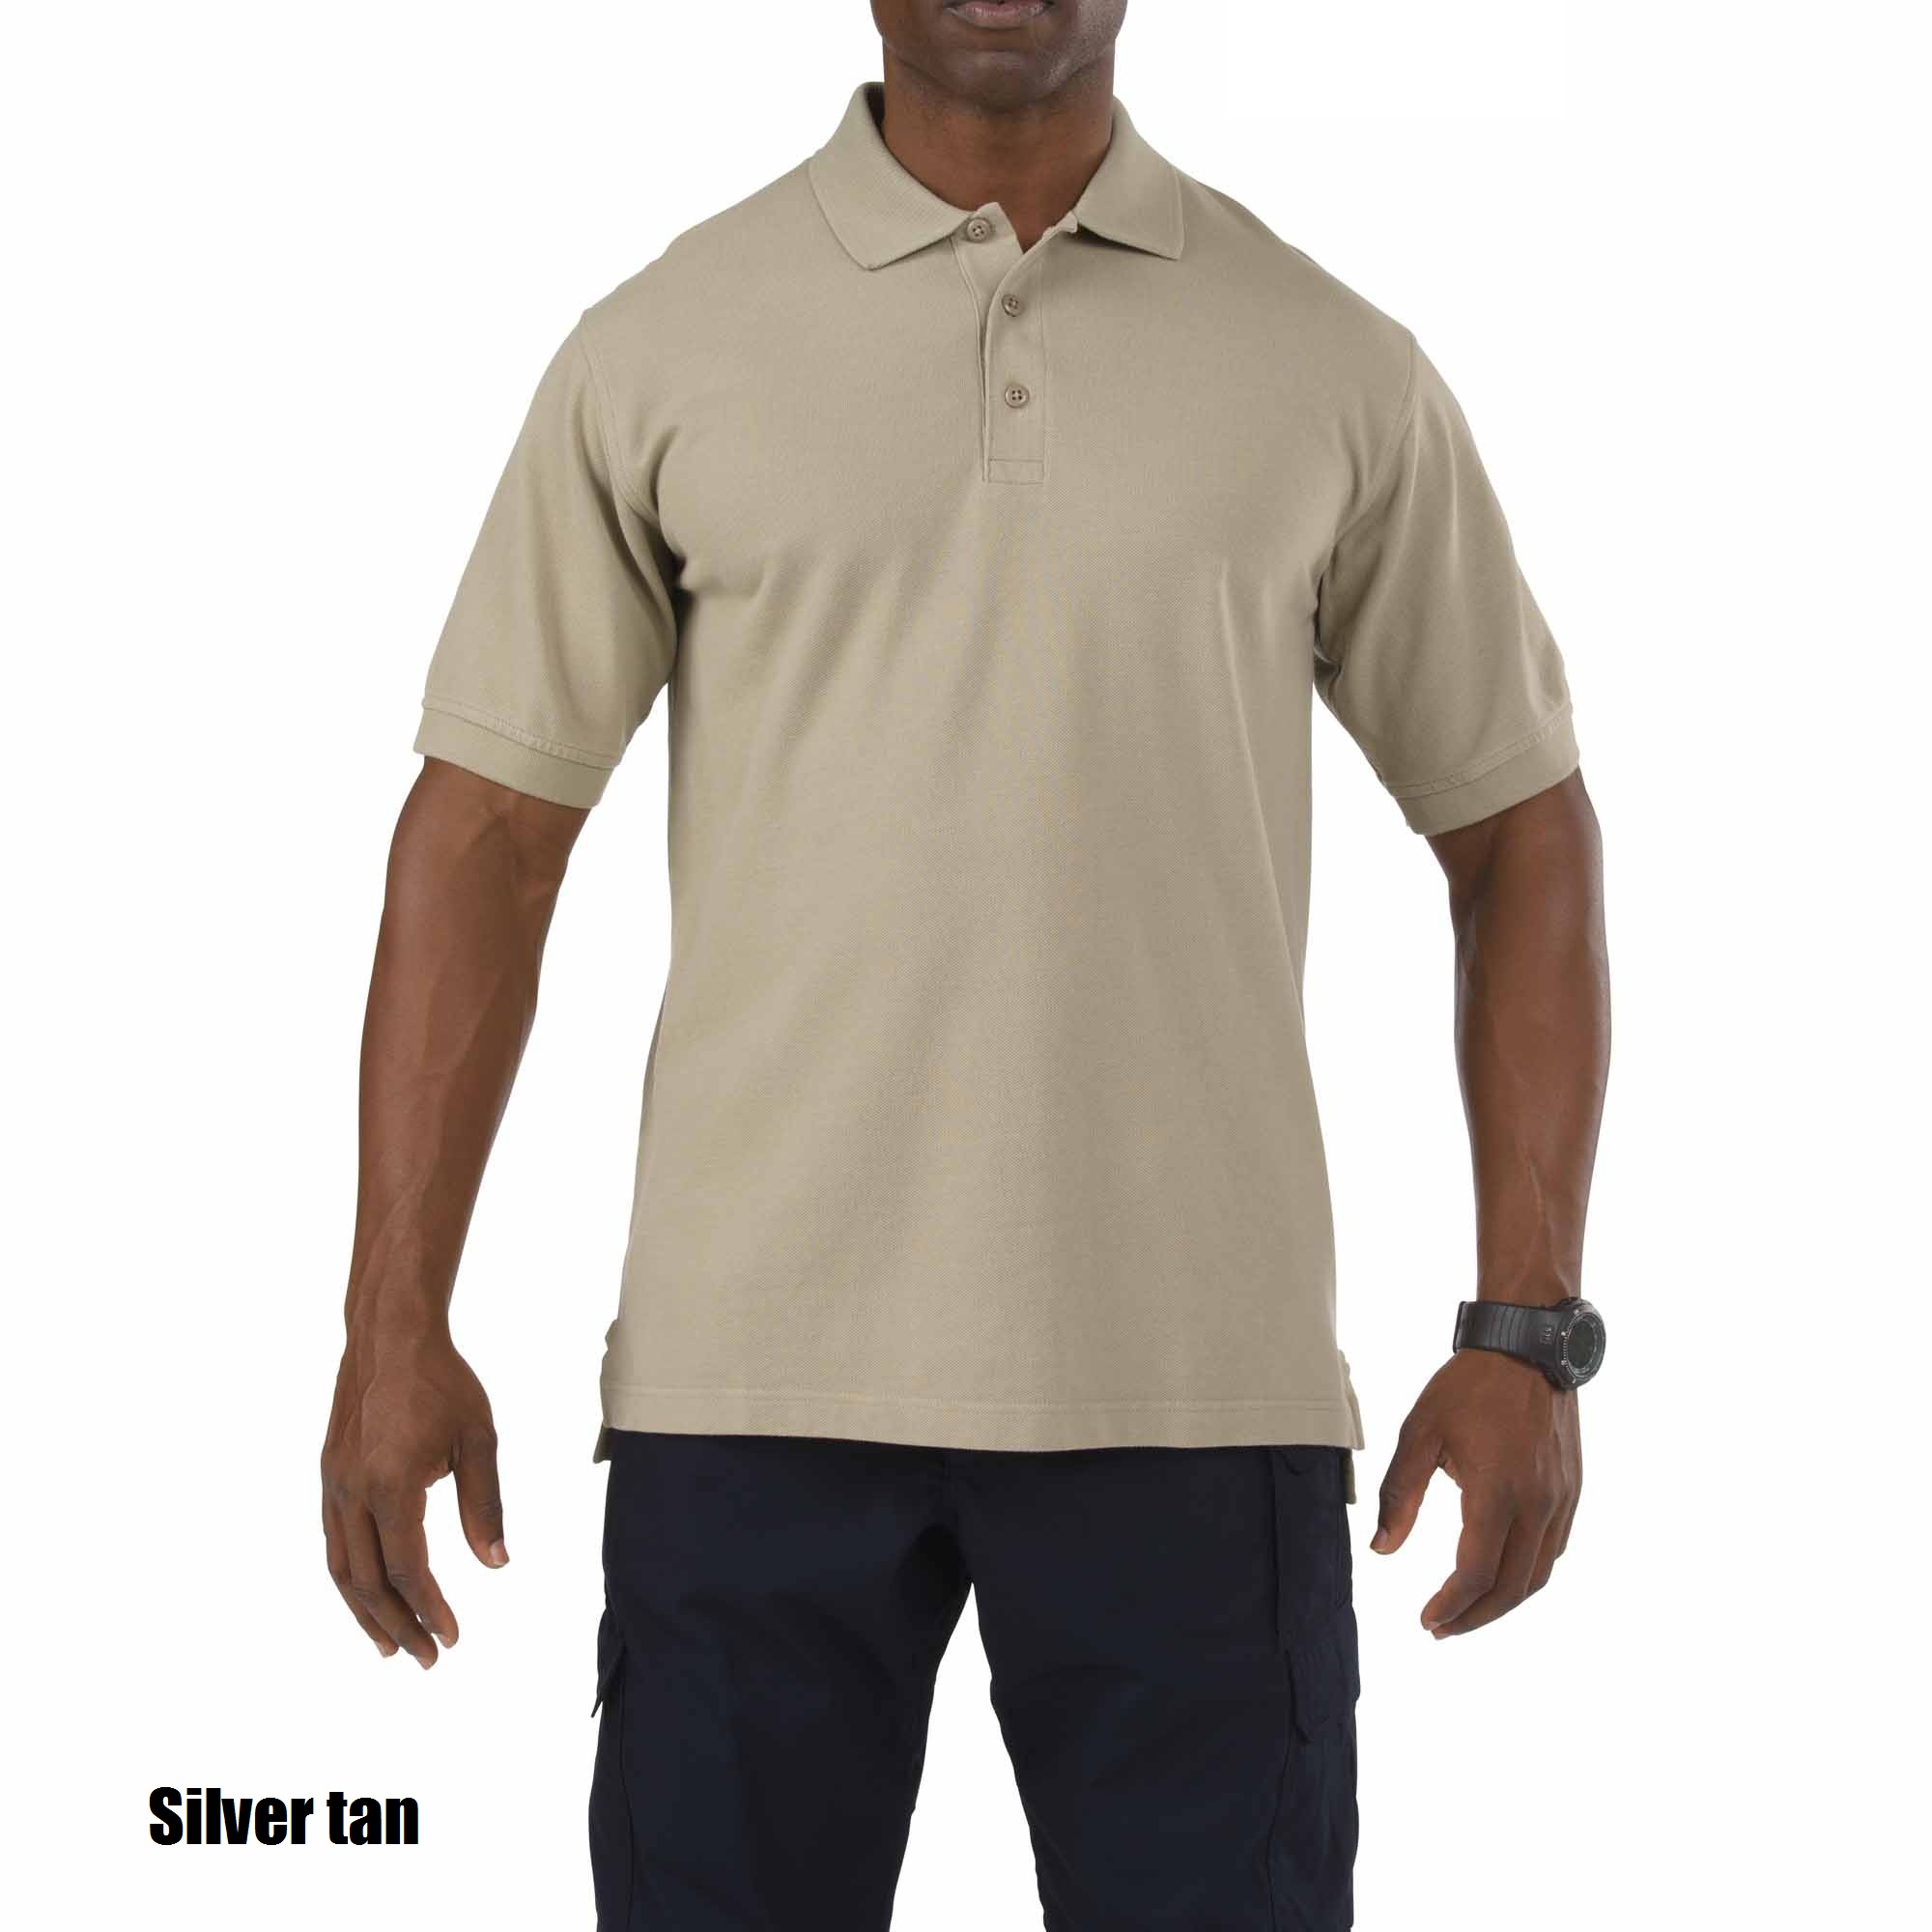 5.11 Professional Polo – Short Sleeve